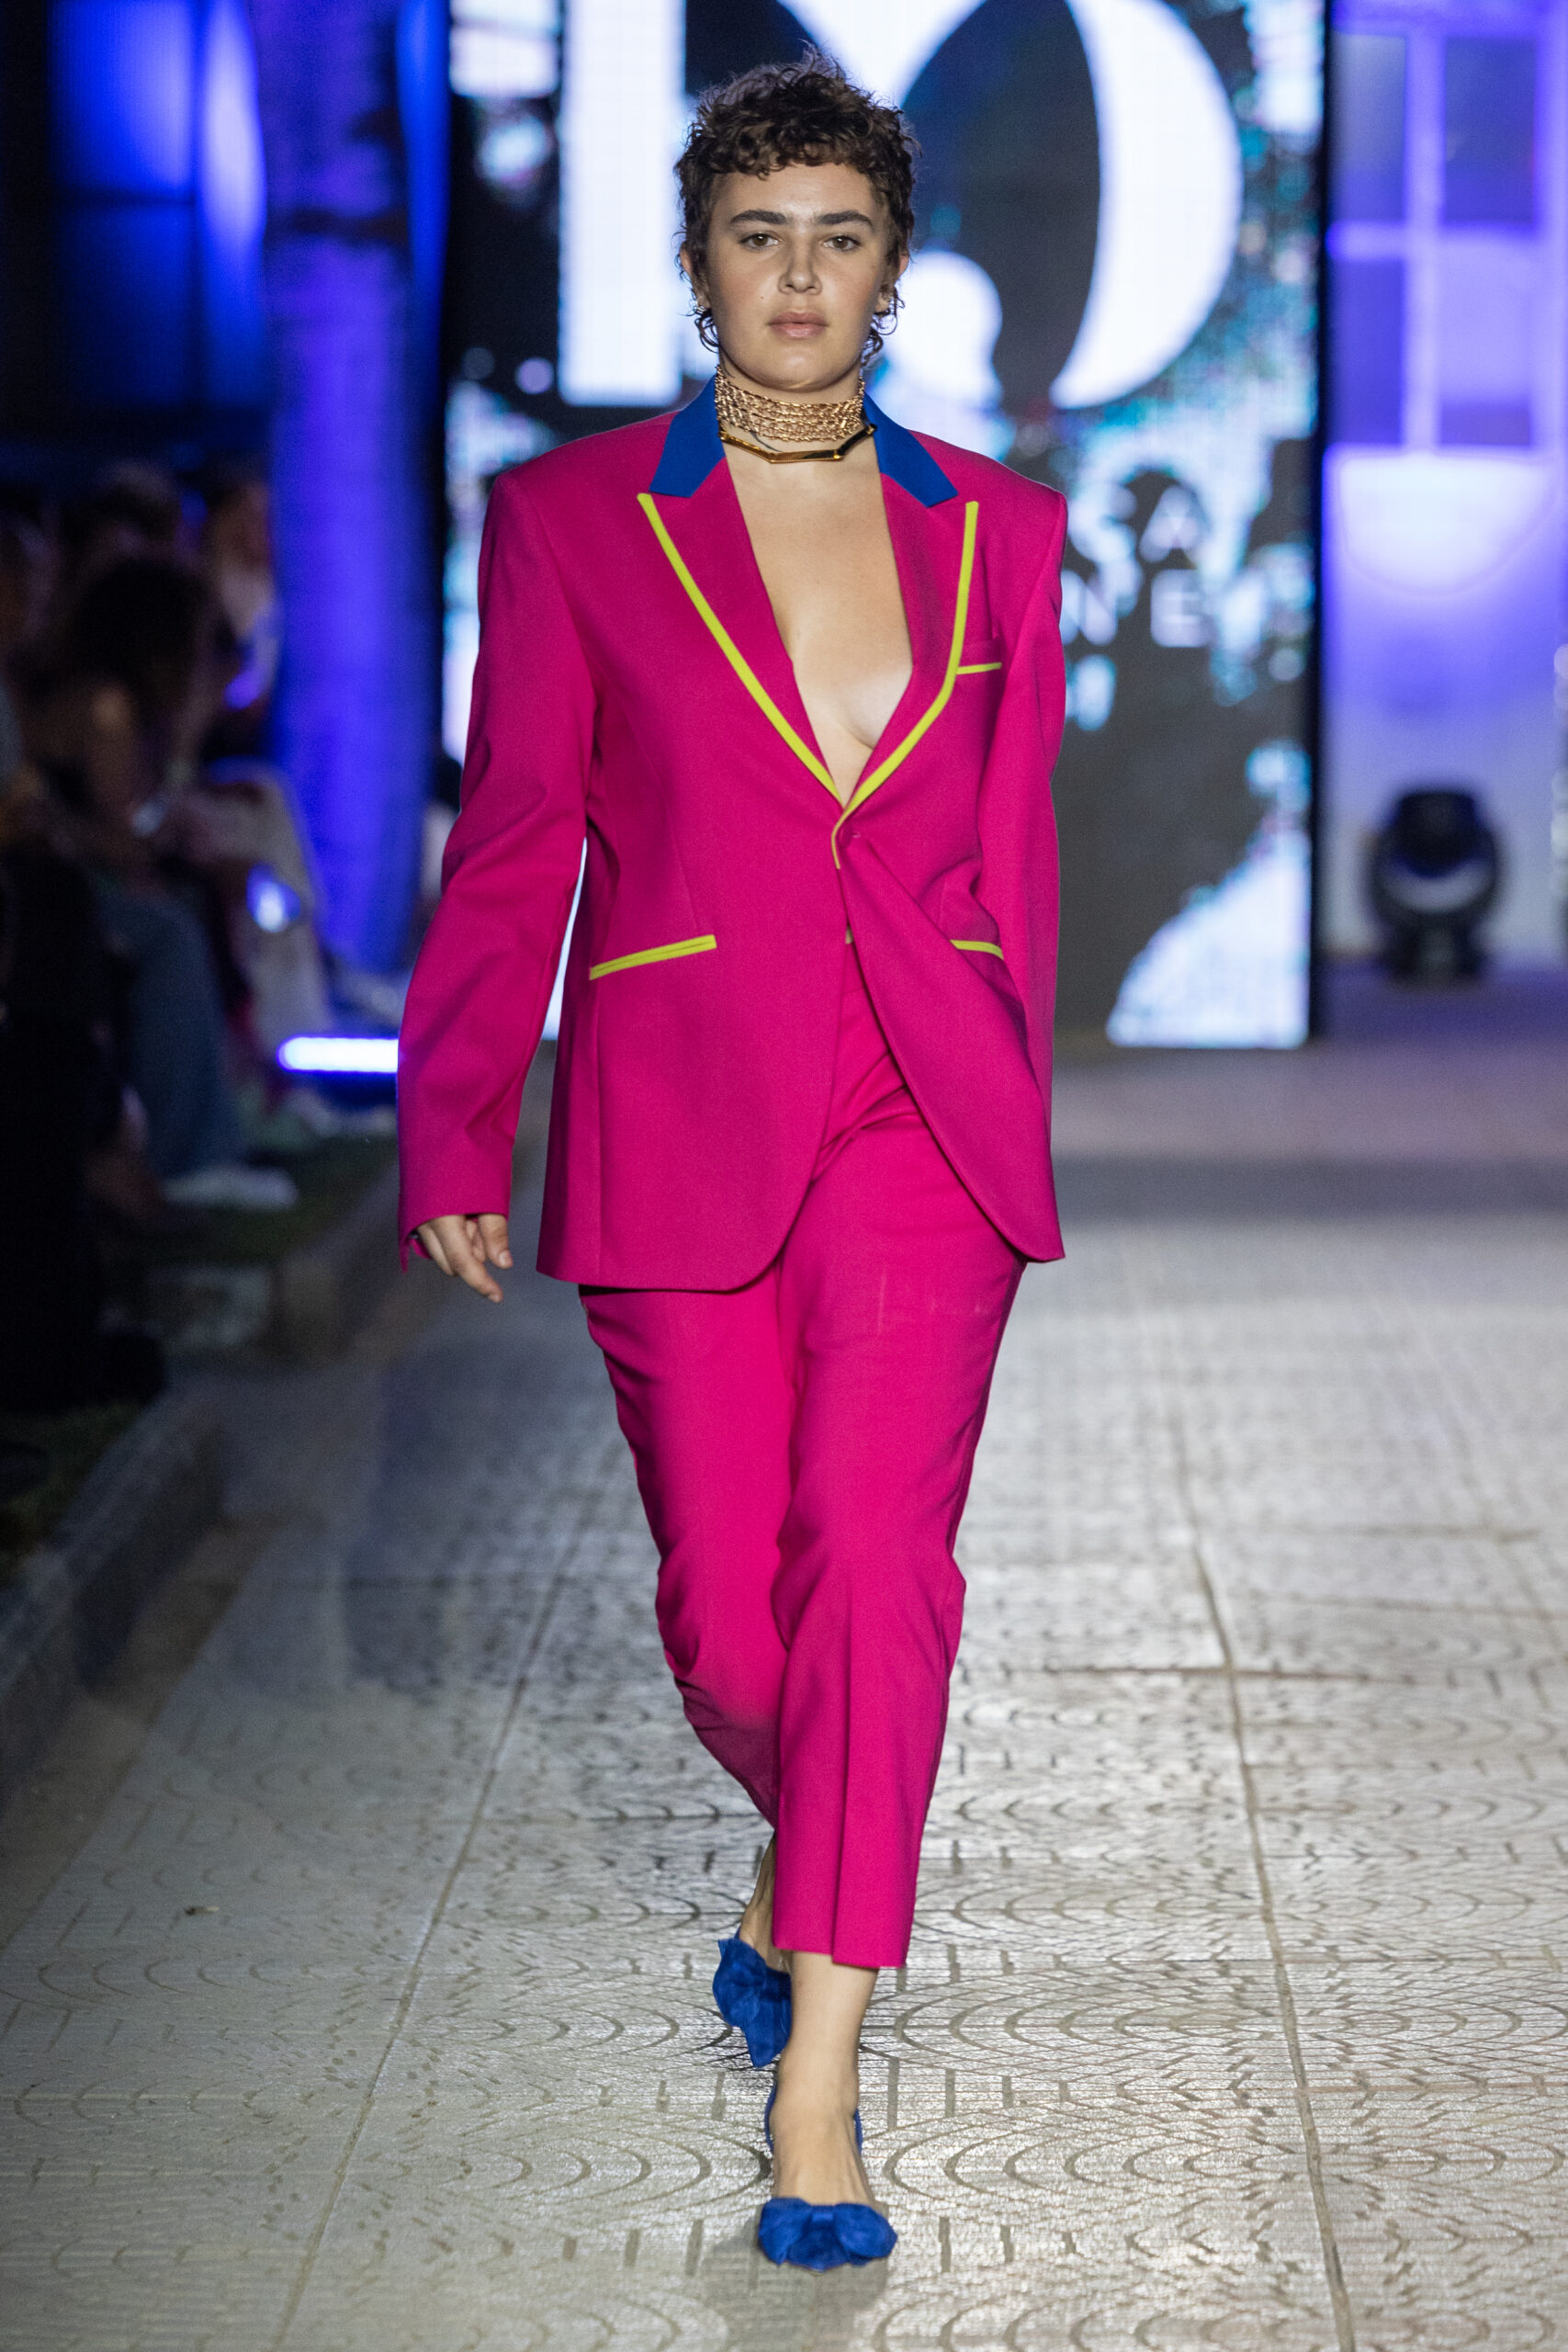 the fashion propellant - Altaroma - Rome is my runway 1 - Francesca Cottone 7